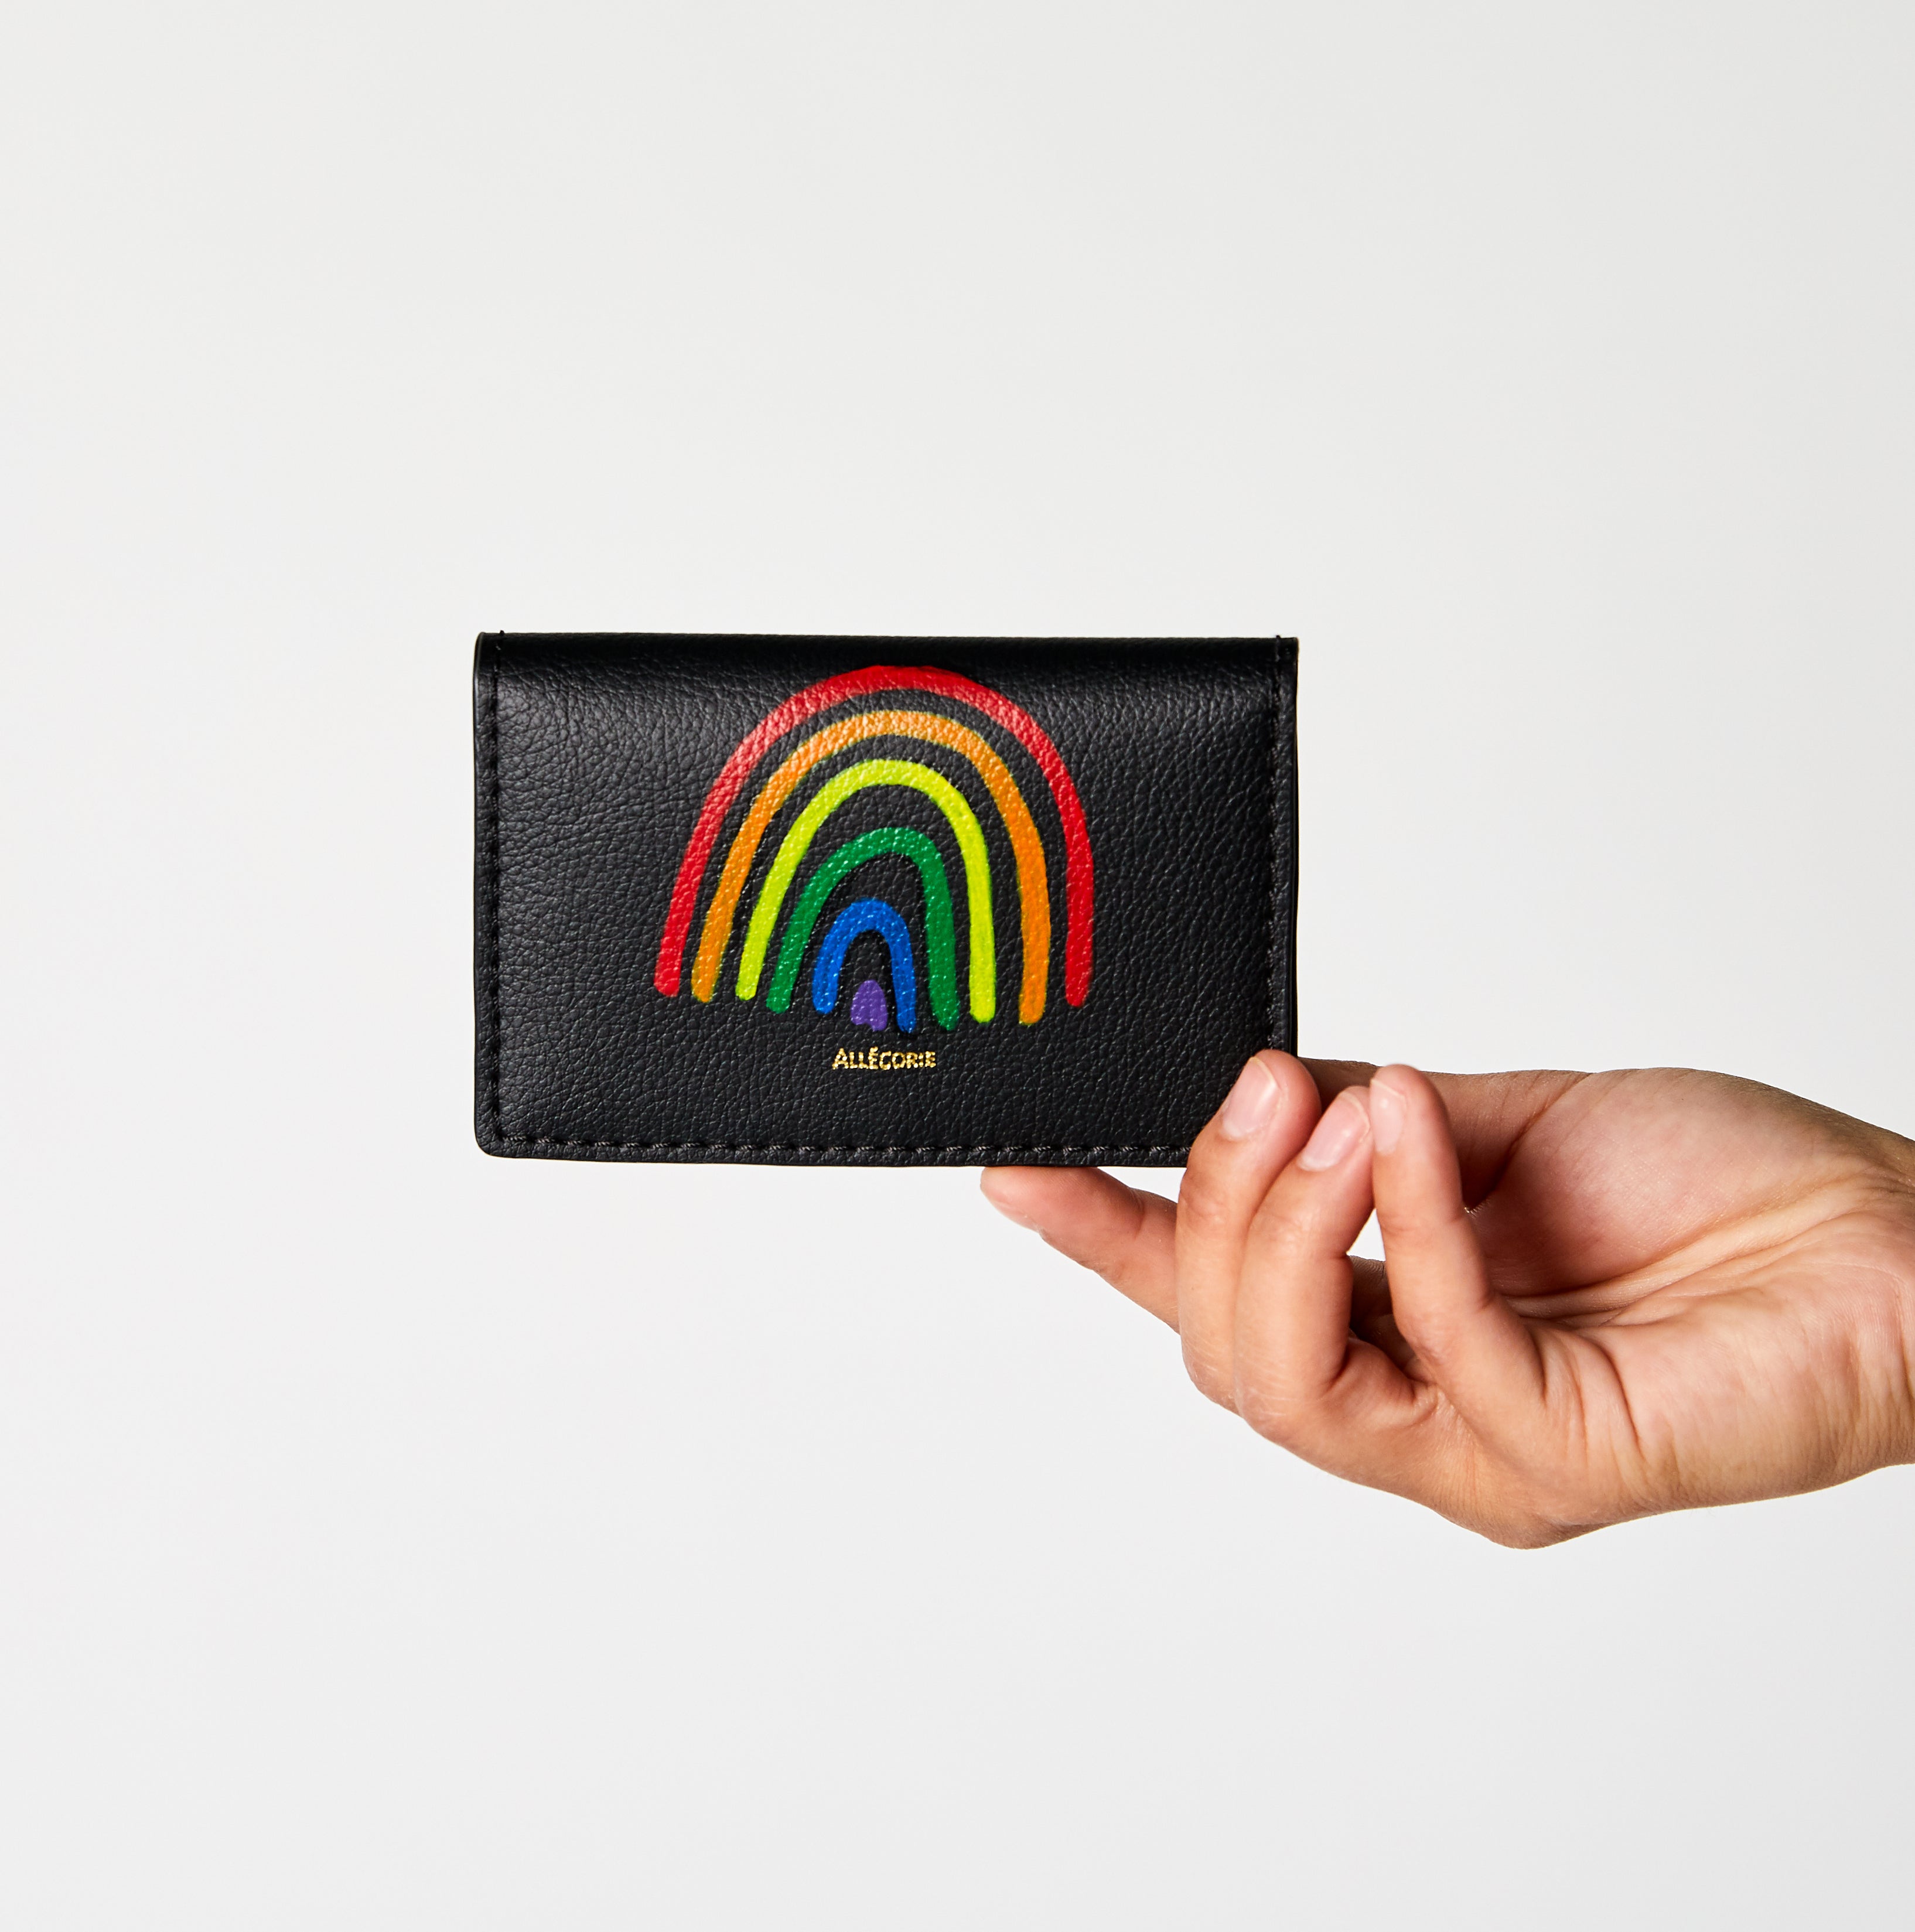 pride rainbow hand painted y LGBTQ artist on vegan sustainable black cardholder.